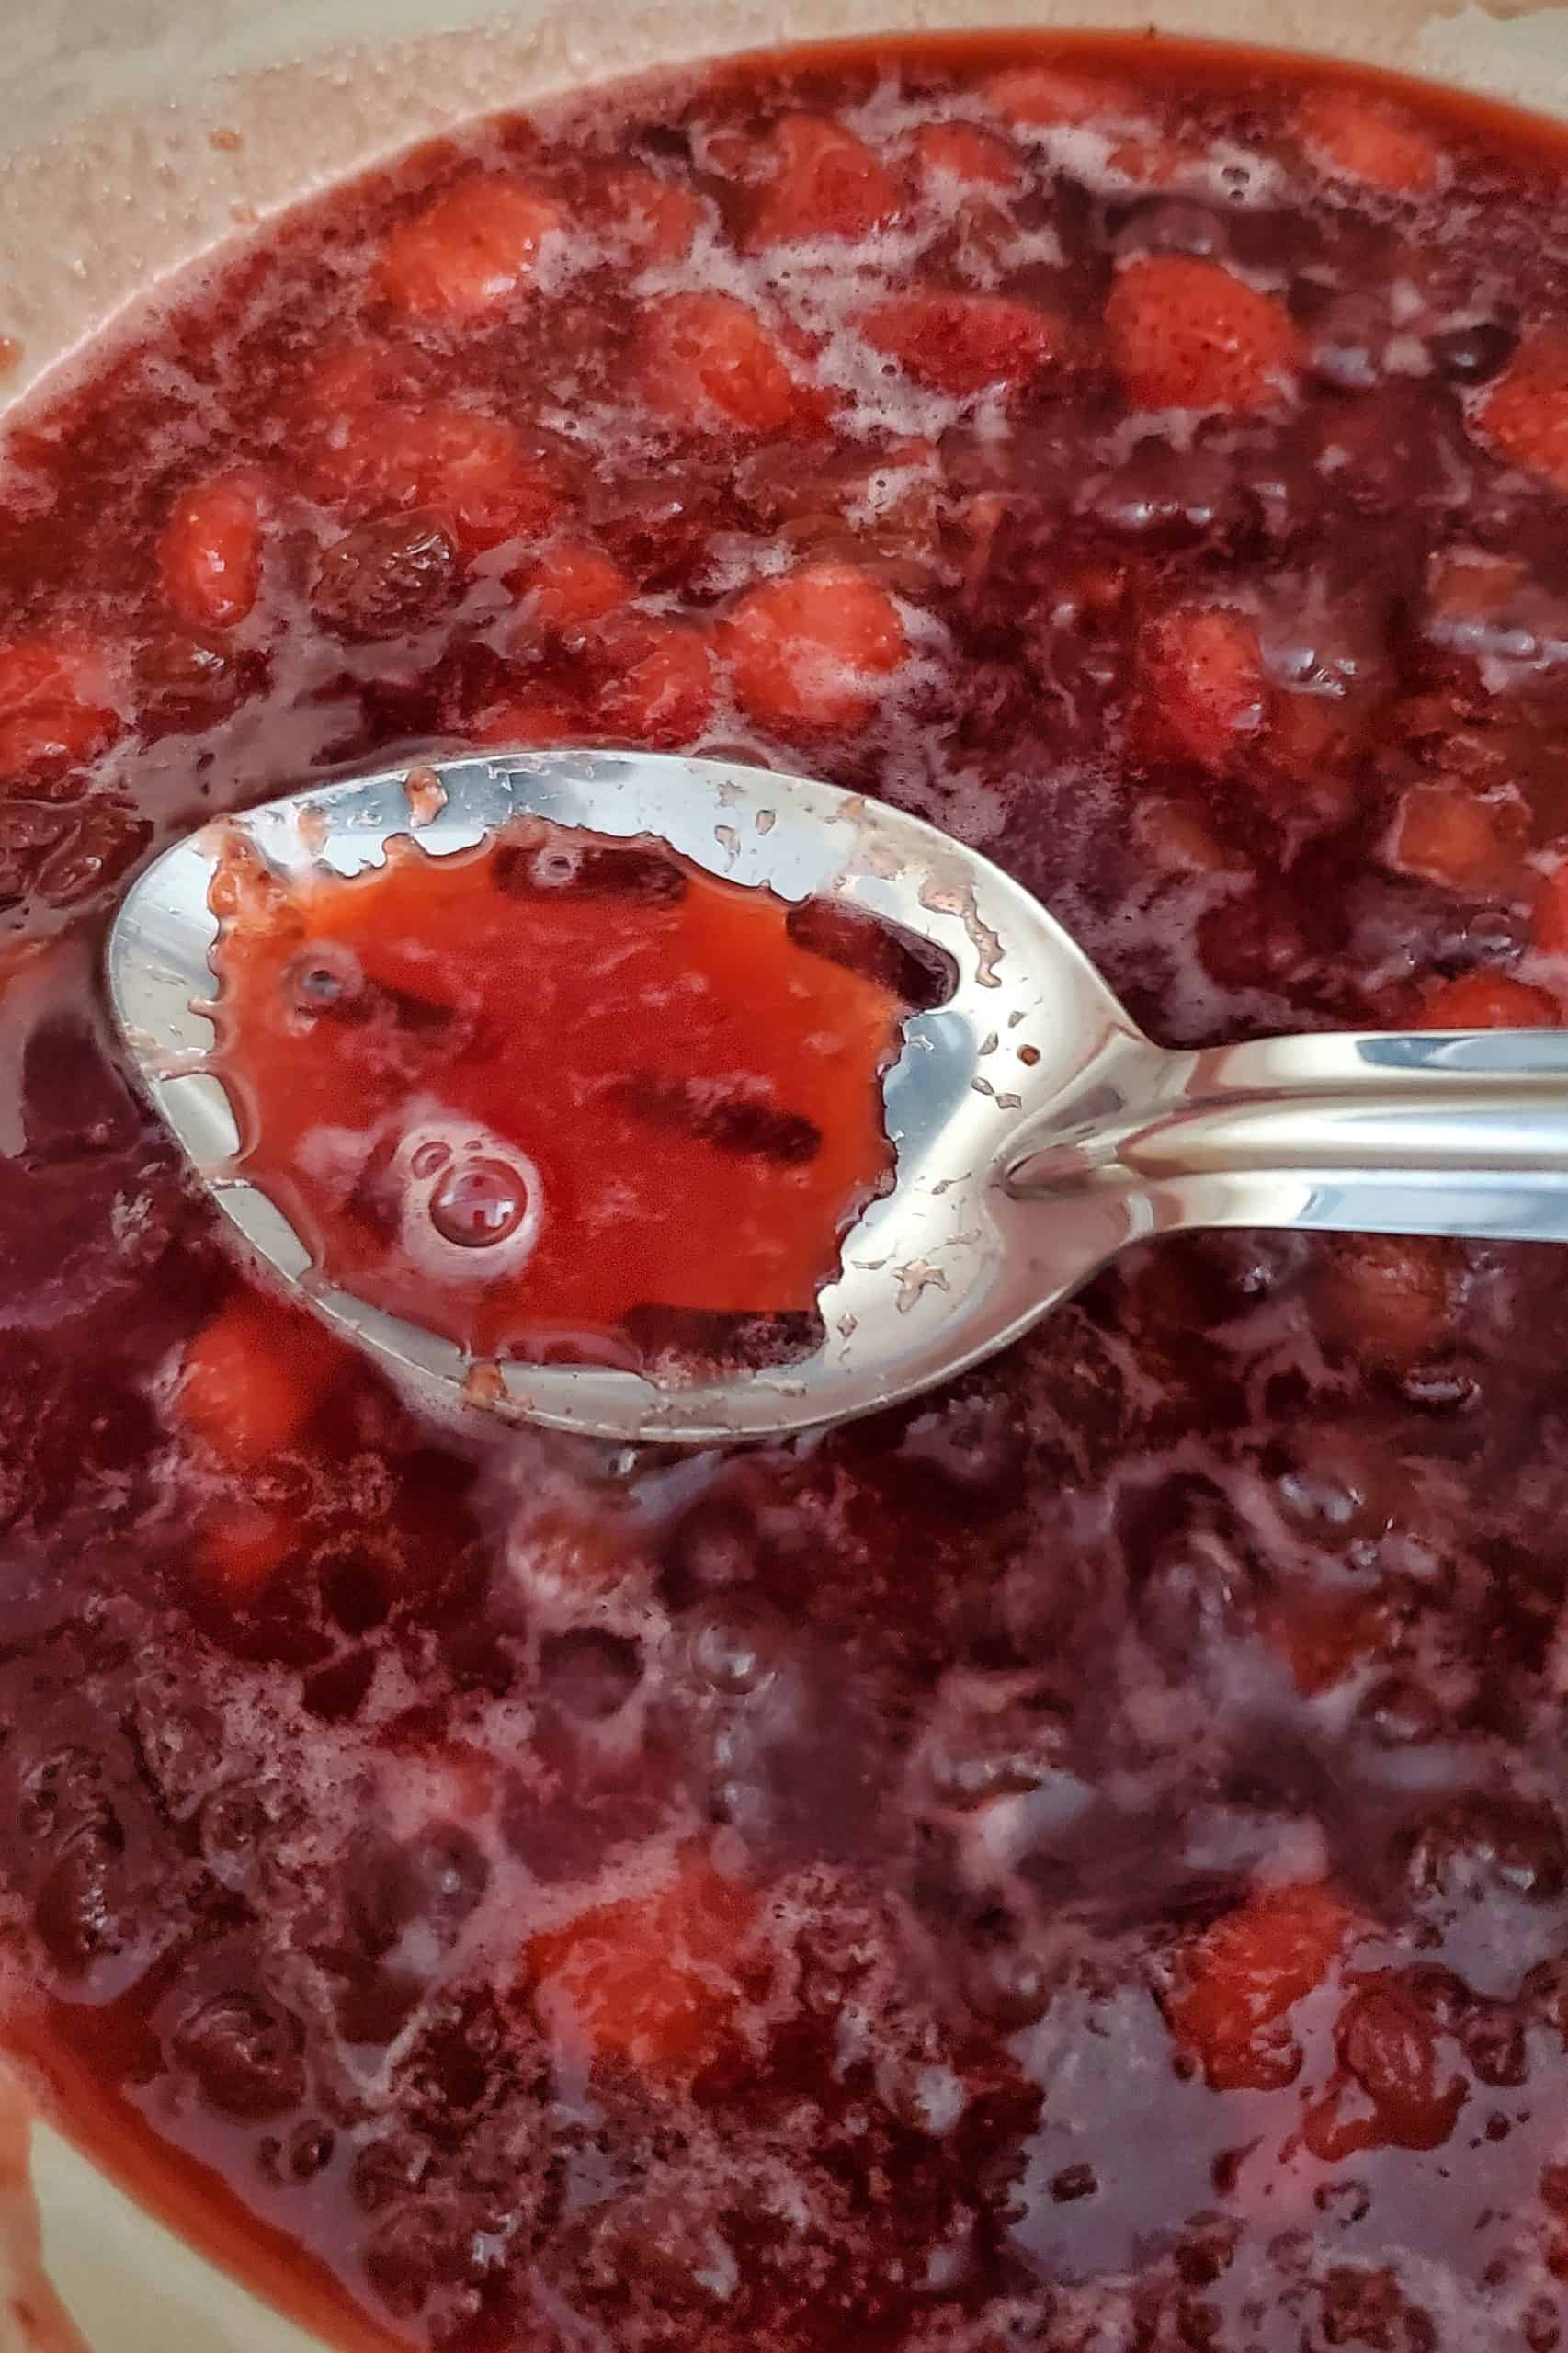 Spoon showing liquid from jam in pan.